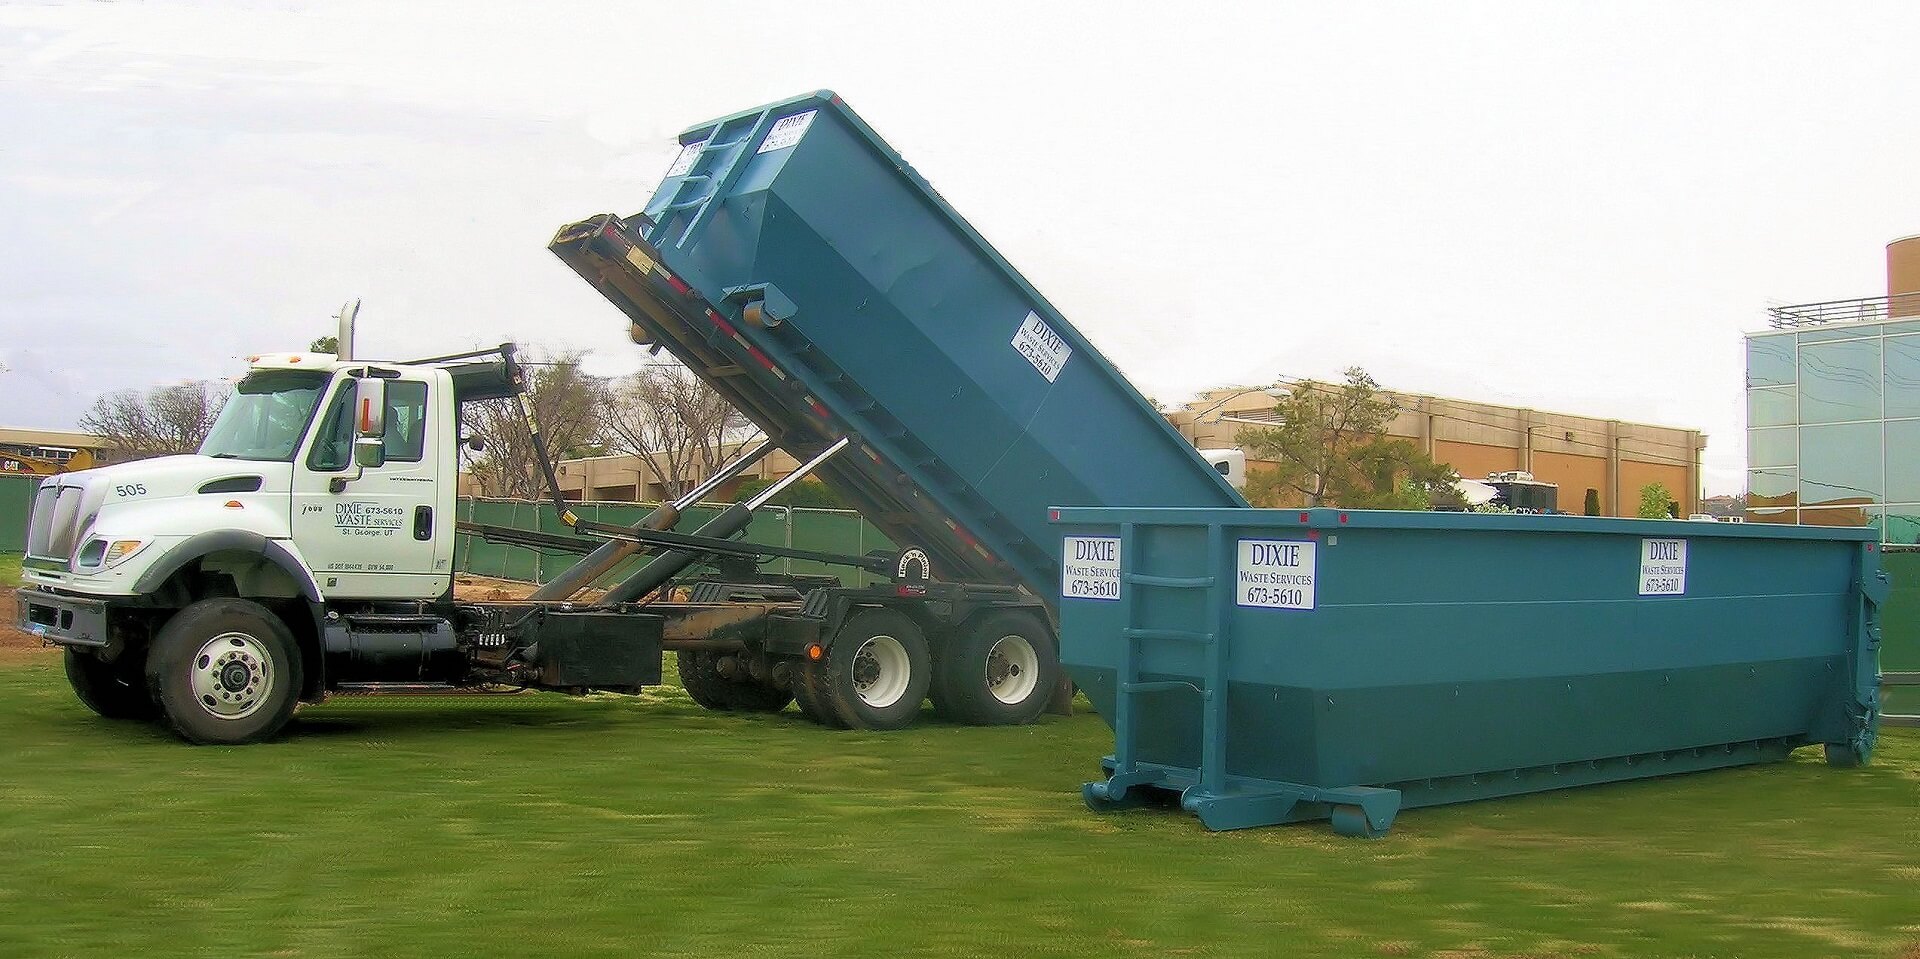 Business Moving Dumpster Services-Colorado Dumpster Services of Loveland